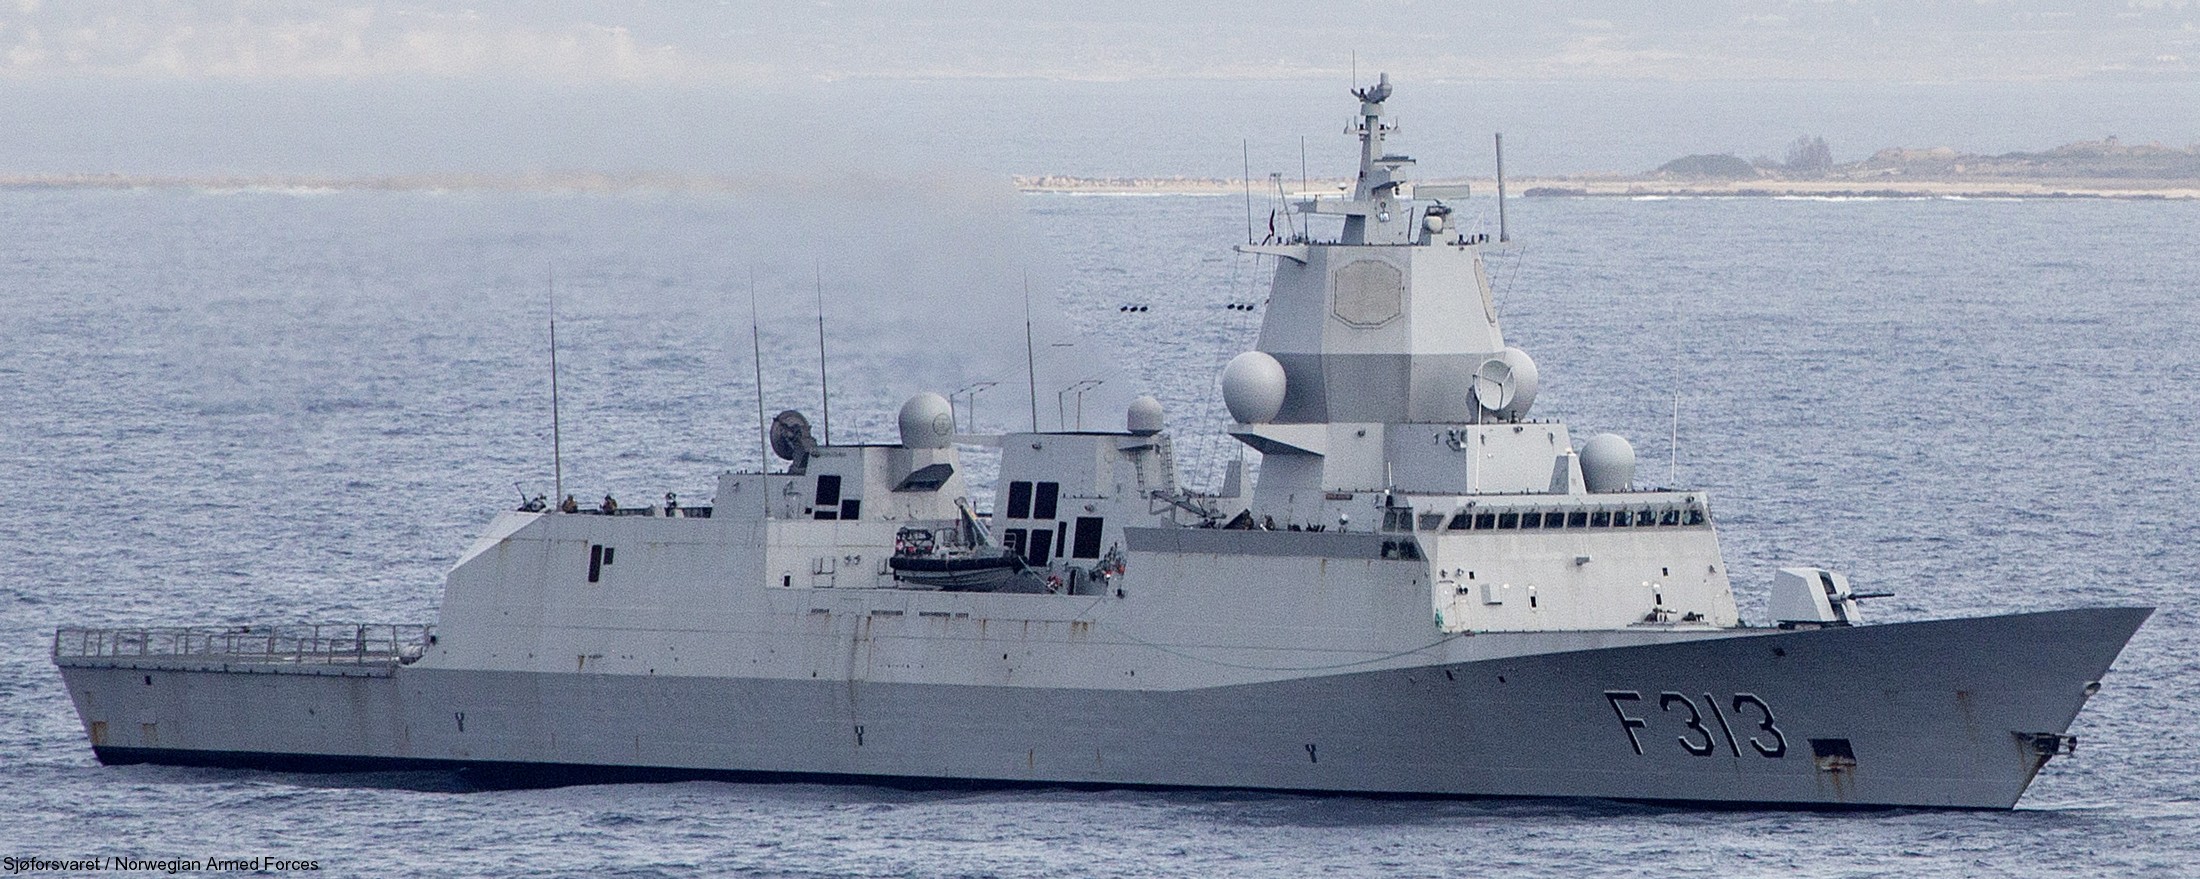 f-313 helge ingstad hnoms knm nansen class frigate royal norwegian navy 35